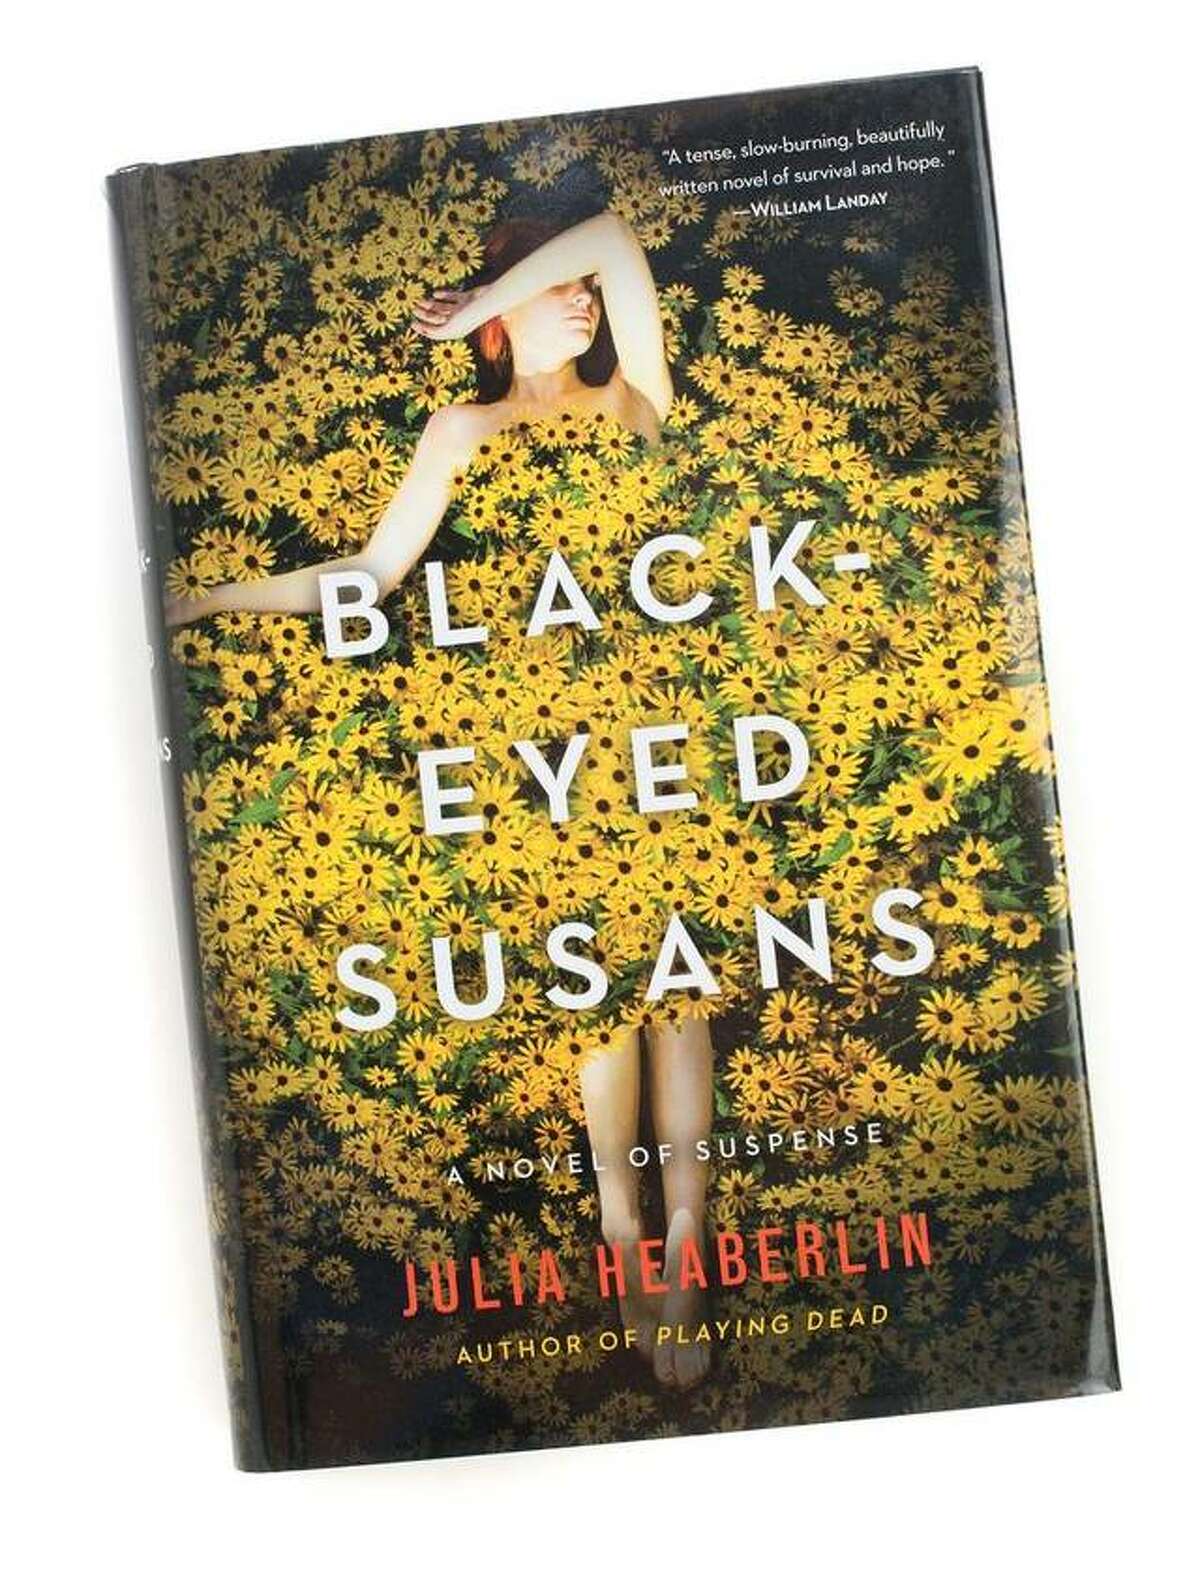 "Black-Eyed Susans" by Julia Heaberlin